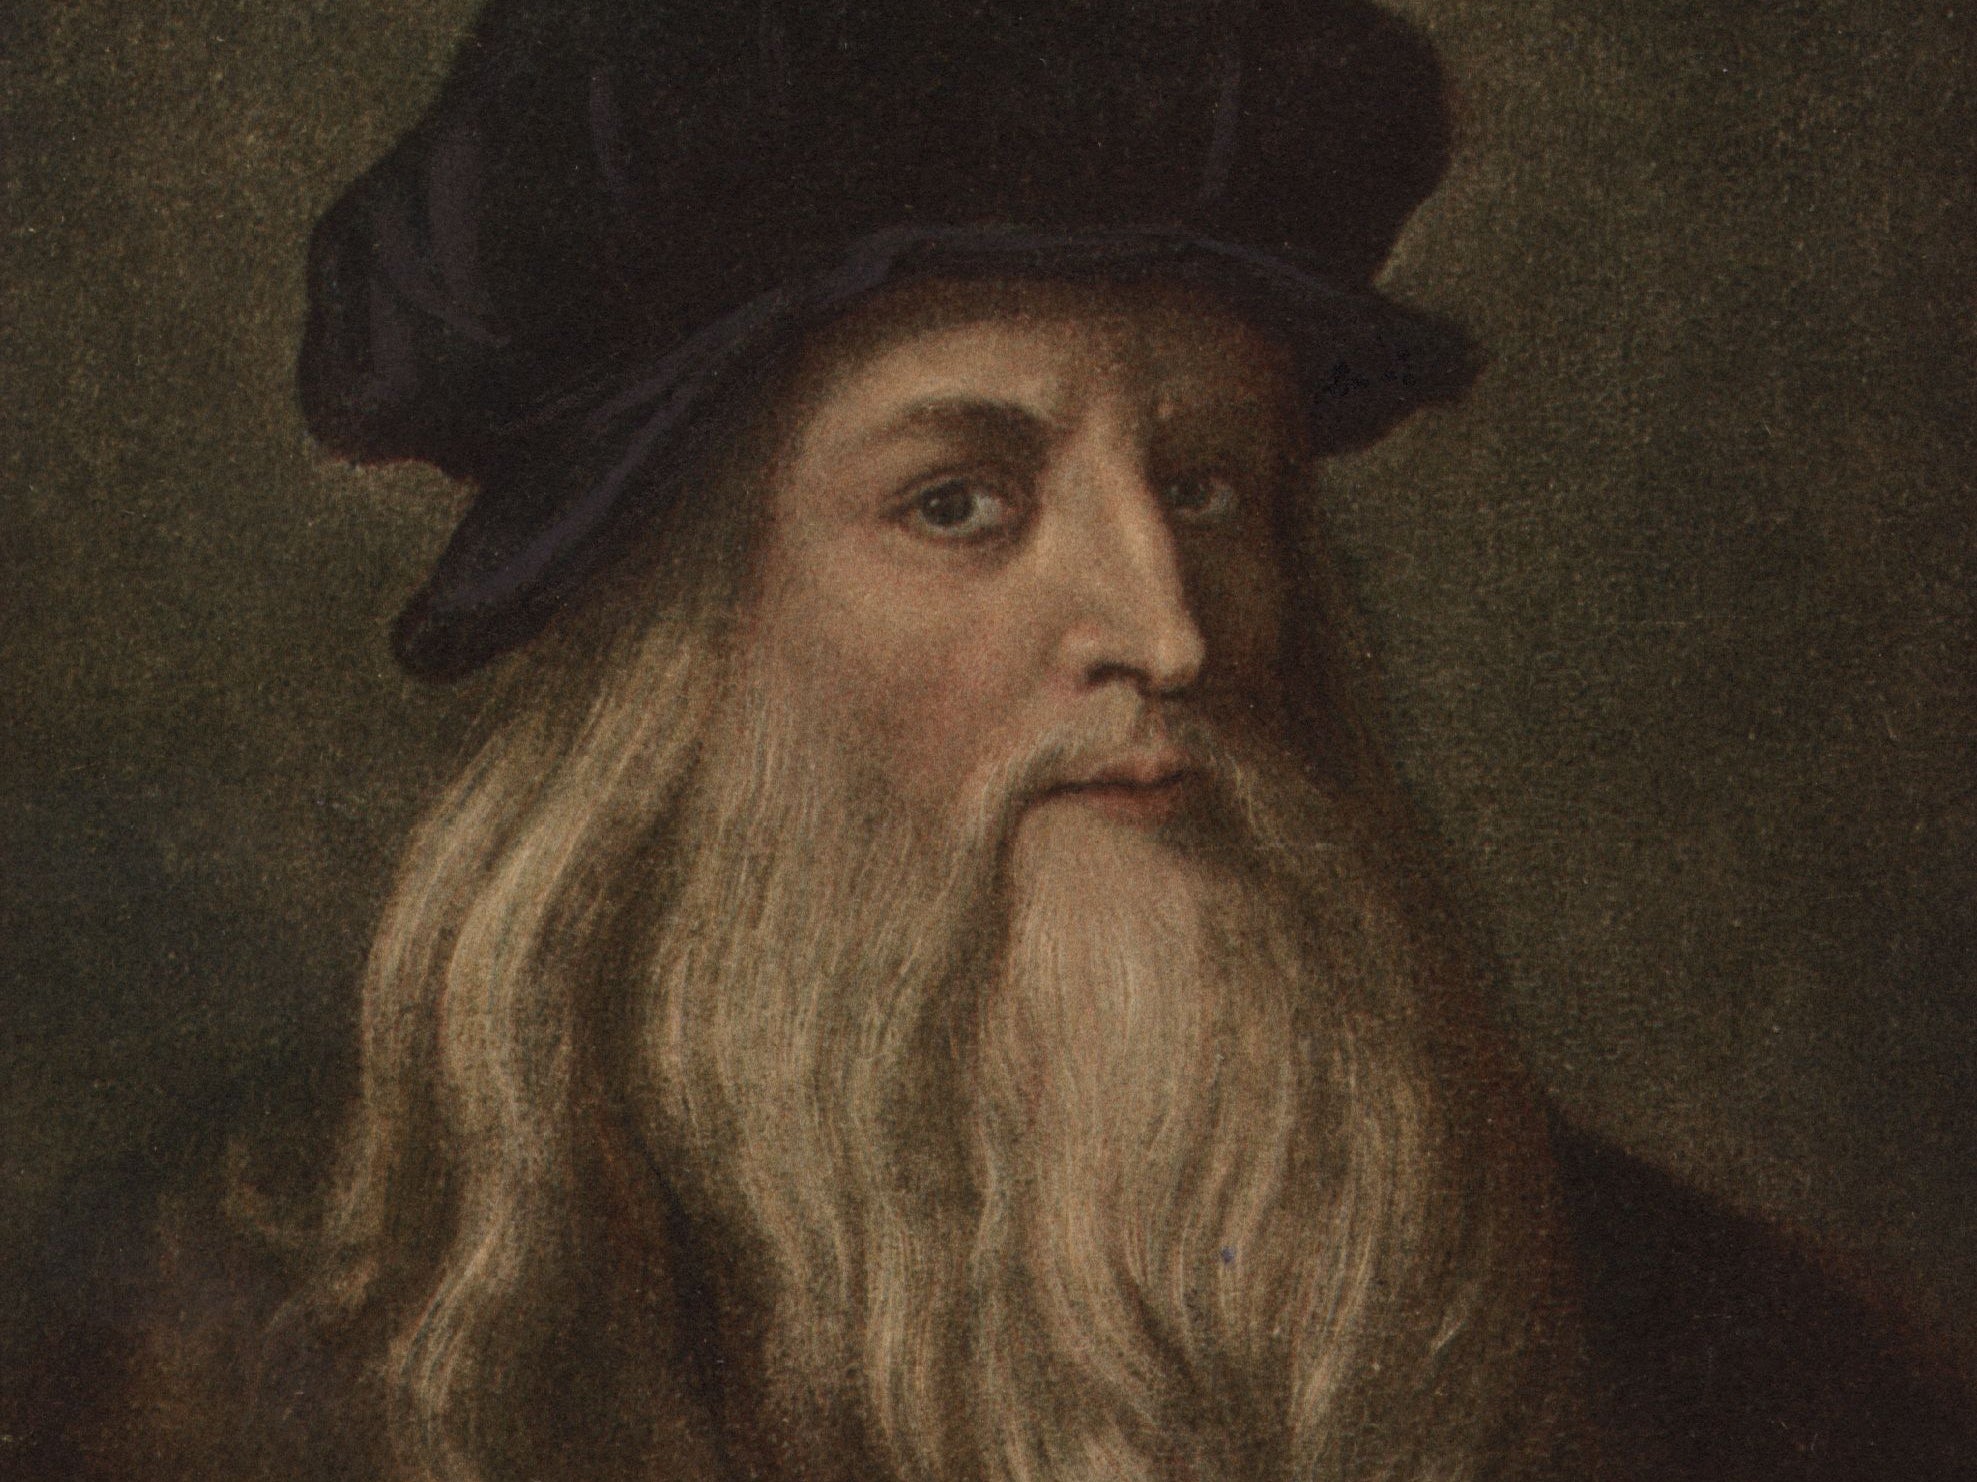 A portrait of da Vinci, circa 1500